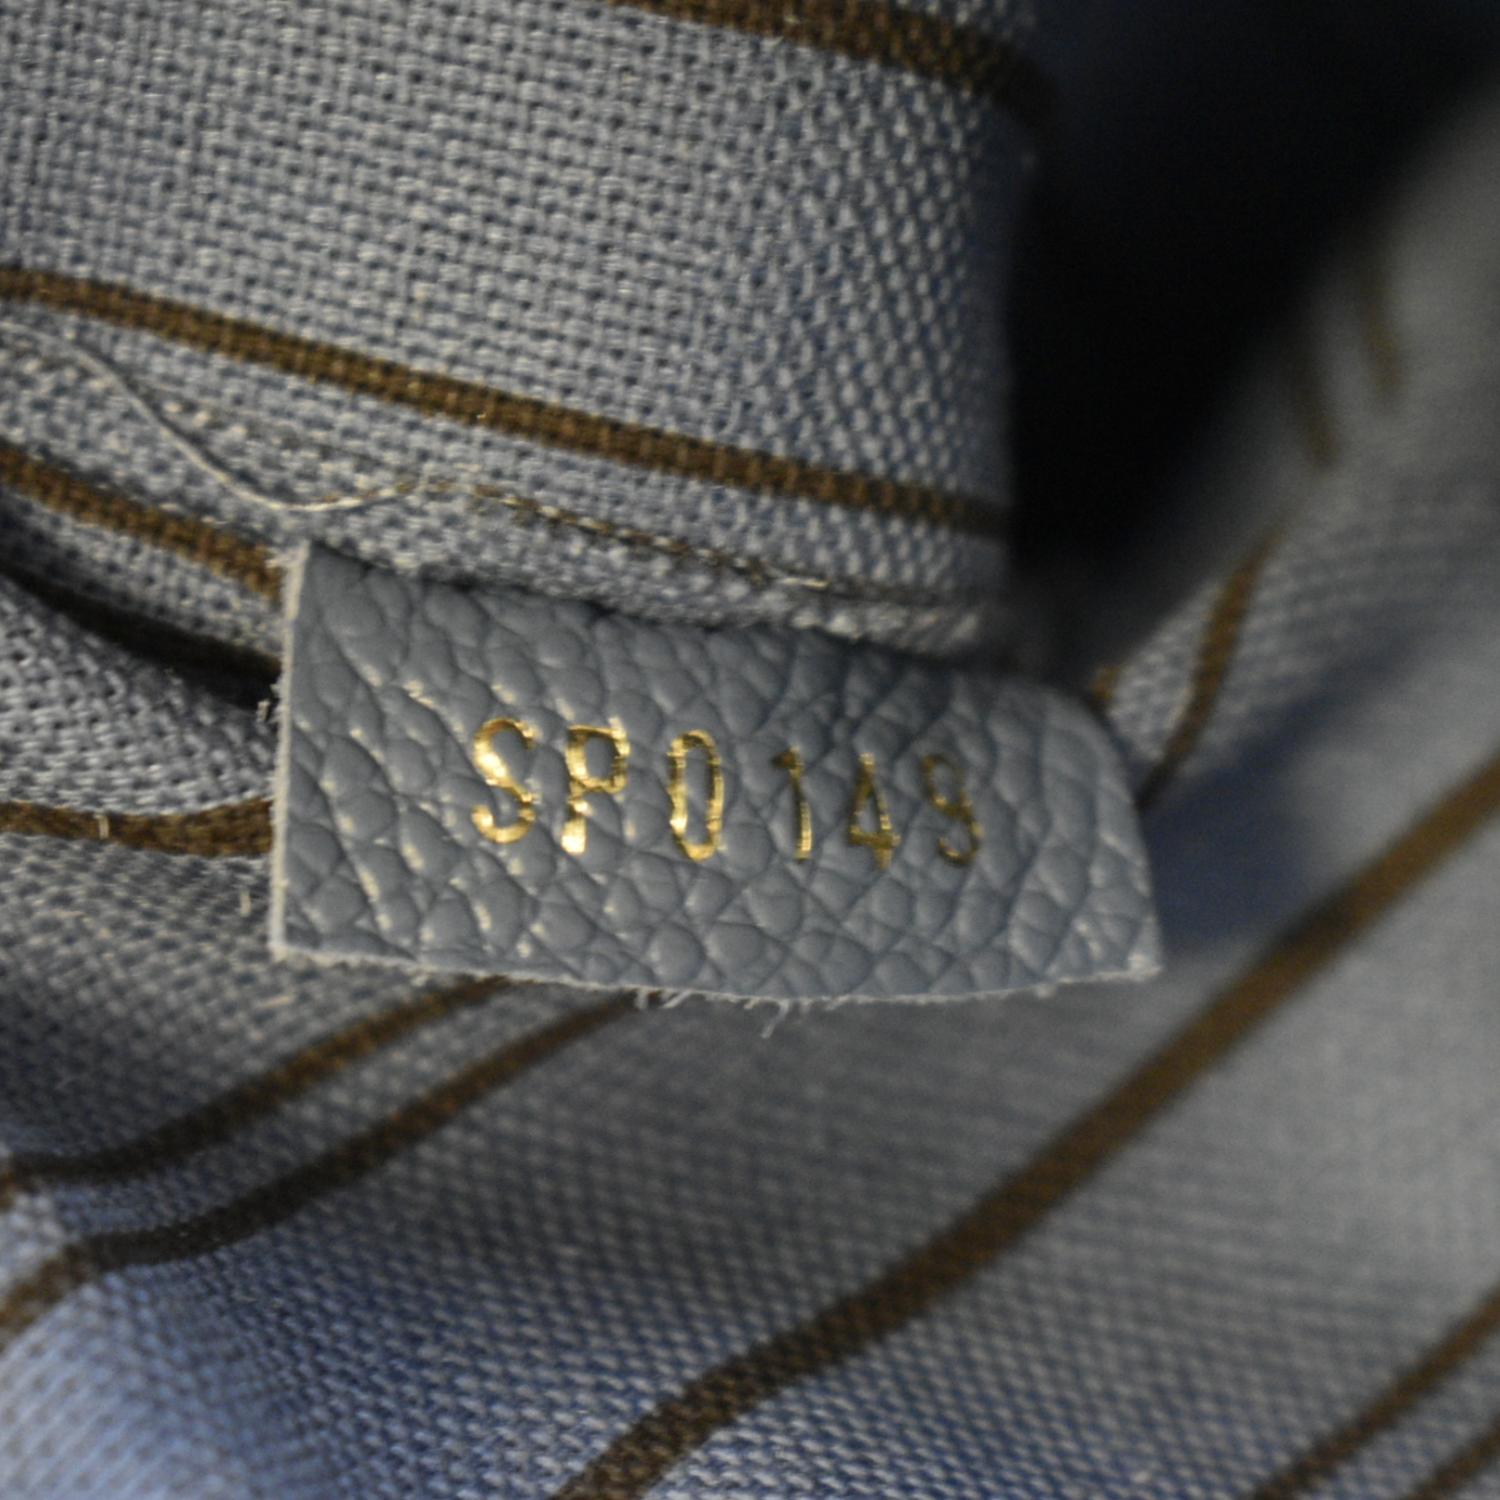 Louis Vuitton Montaigne Bb Monogram Empreinte Leather Satchel Bag